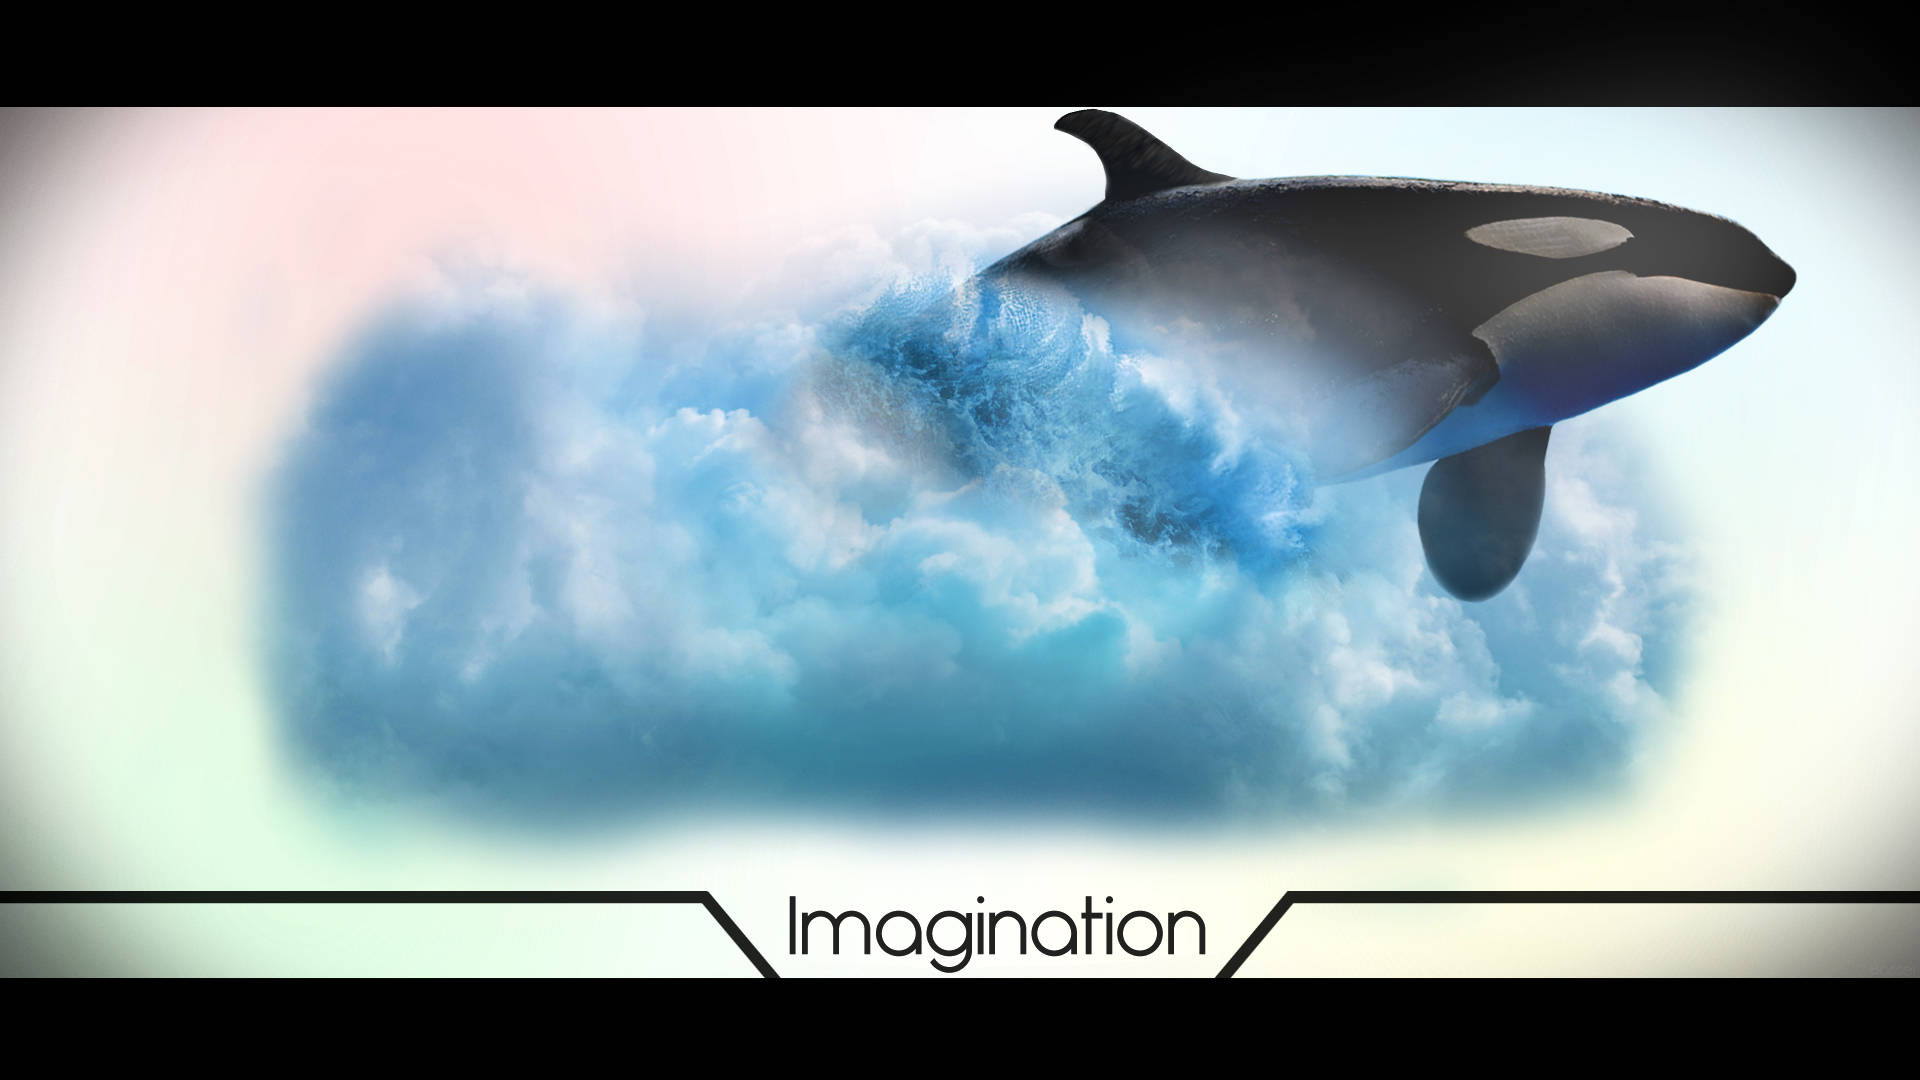 orca breaching wallpaper